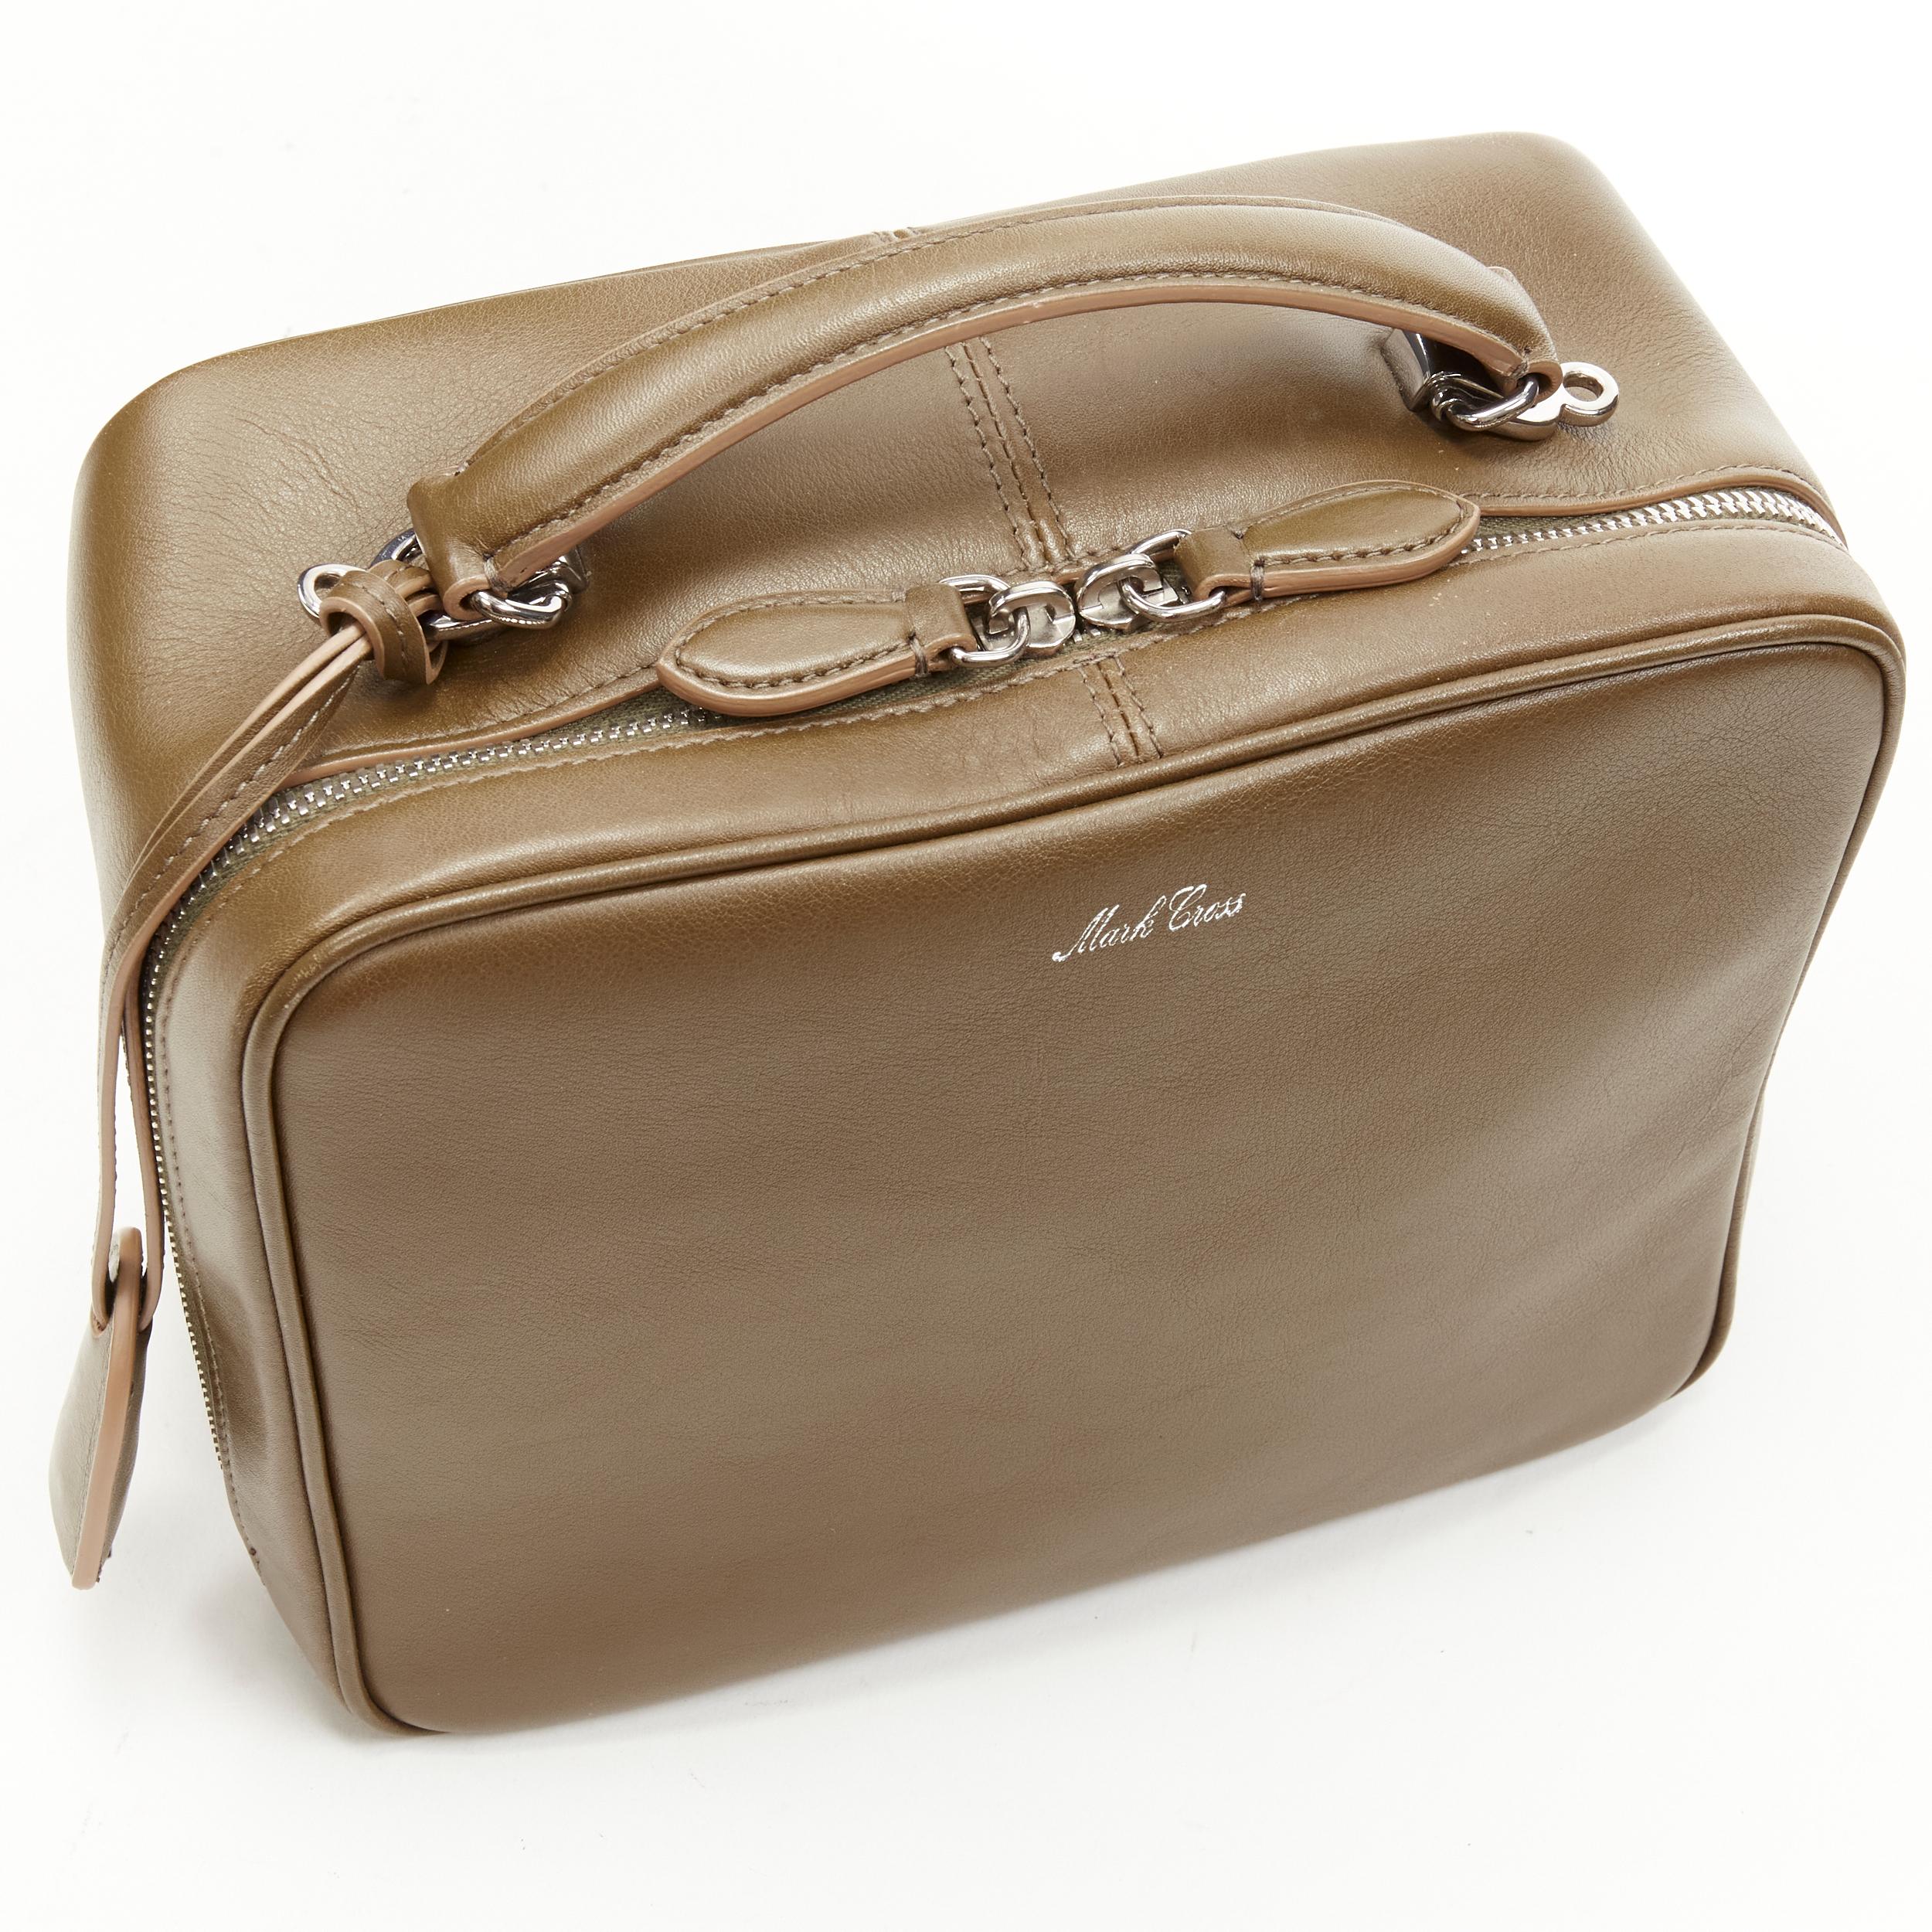 Women's MARK CROSS olive green leather soft leather crossbody vanity box bag